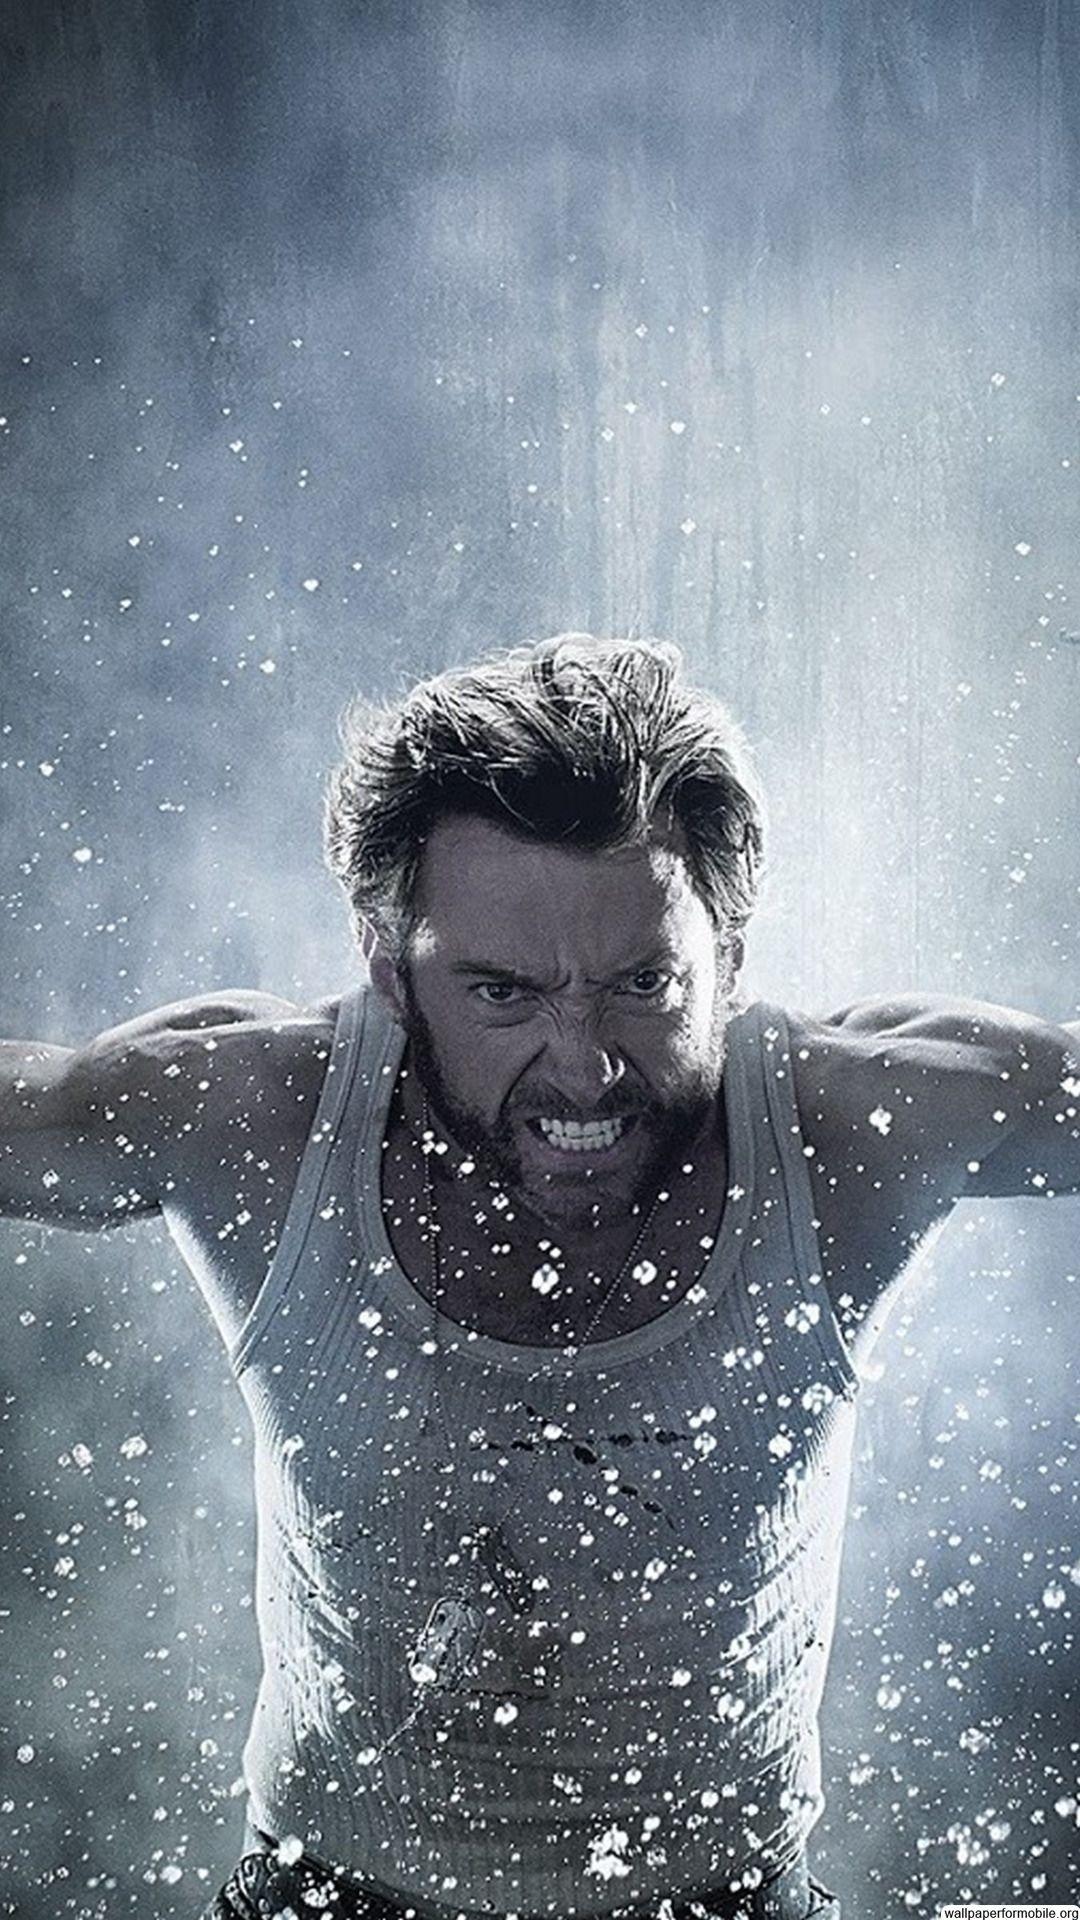 X Men Wolverine Wallpaper Free Download for Mobile